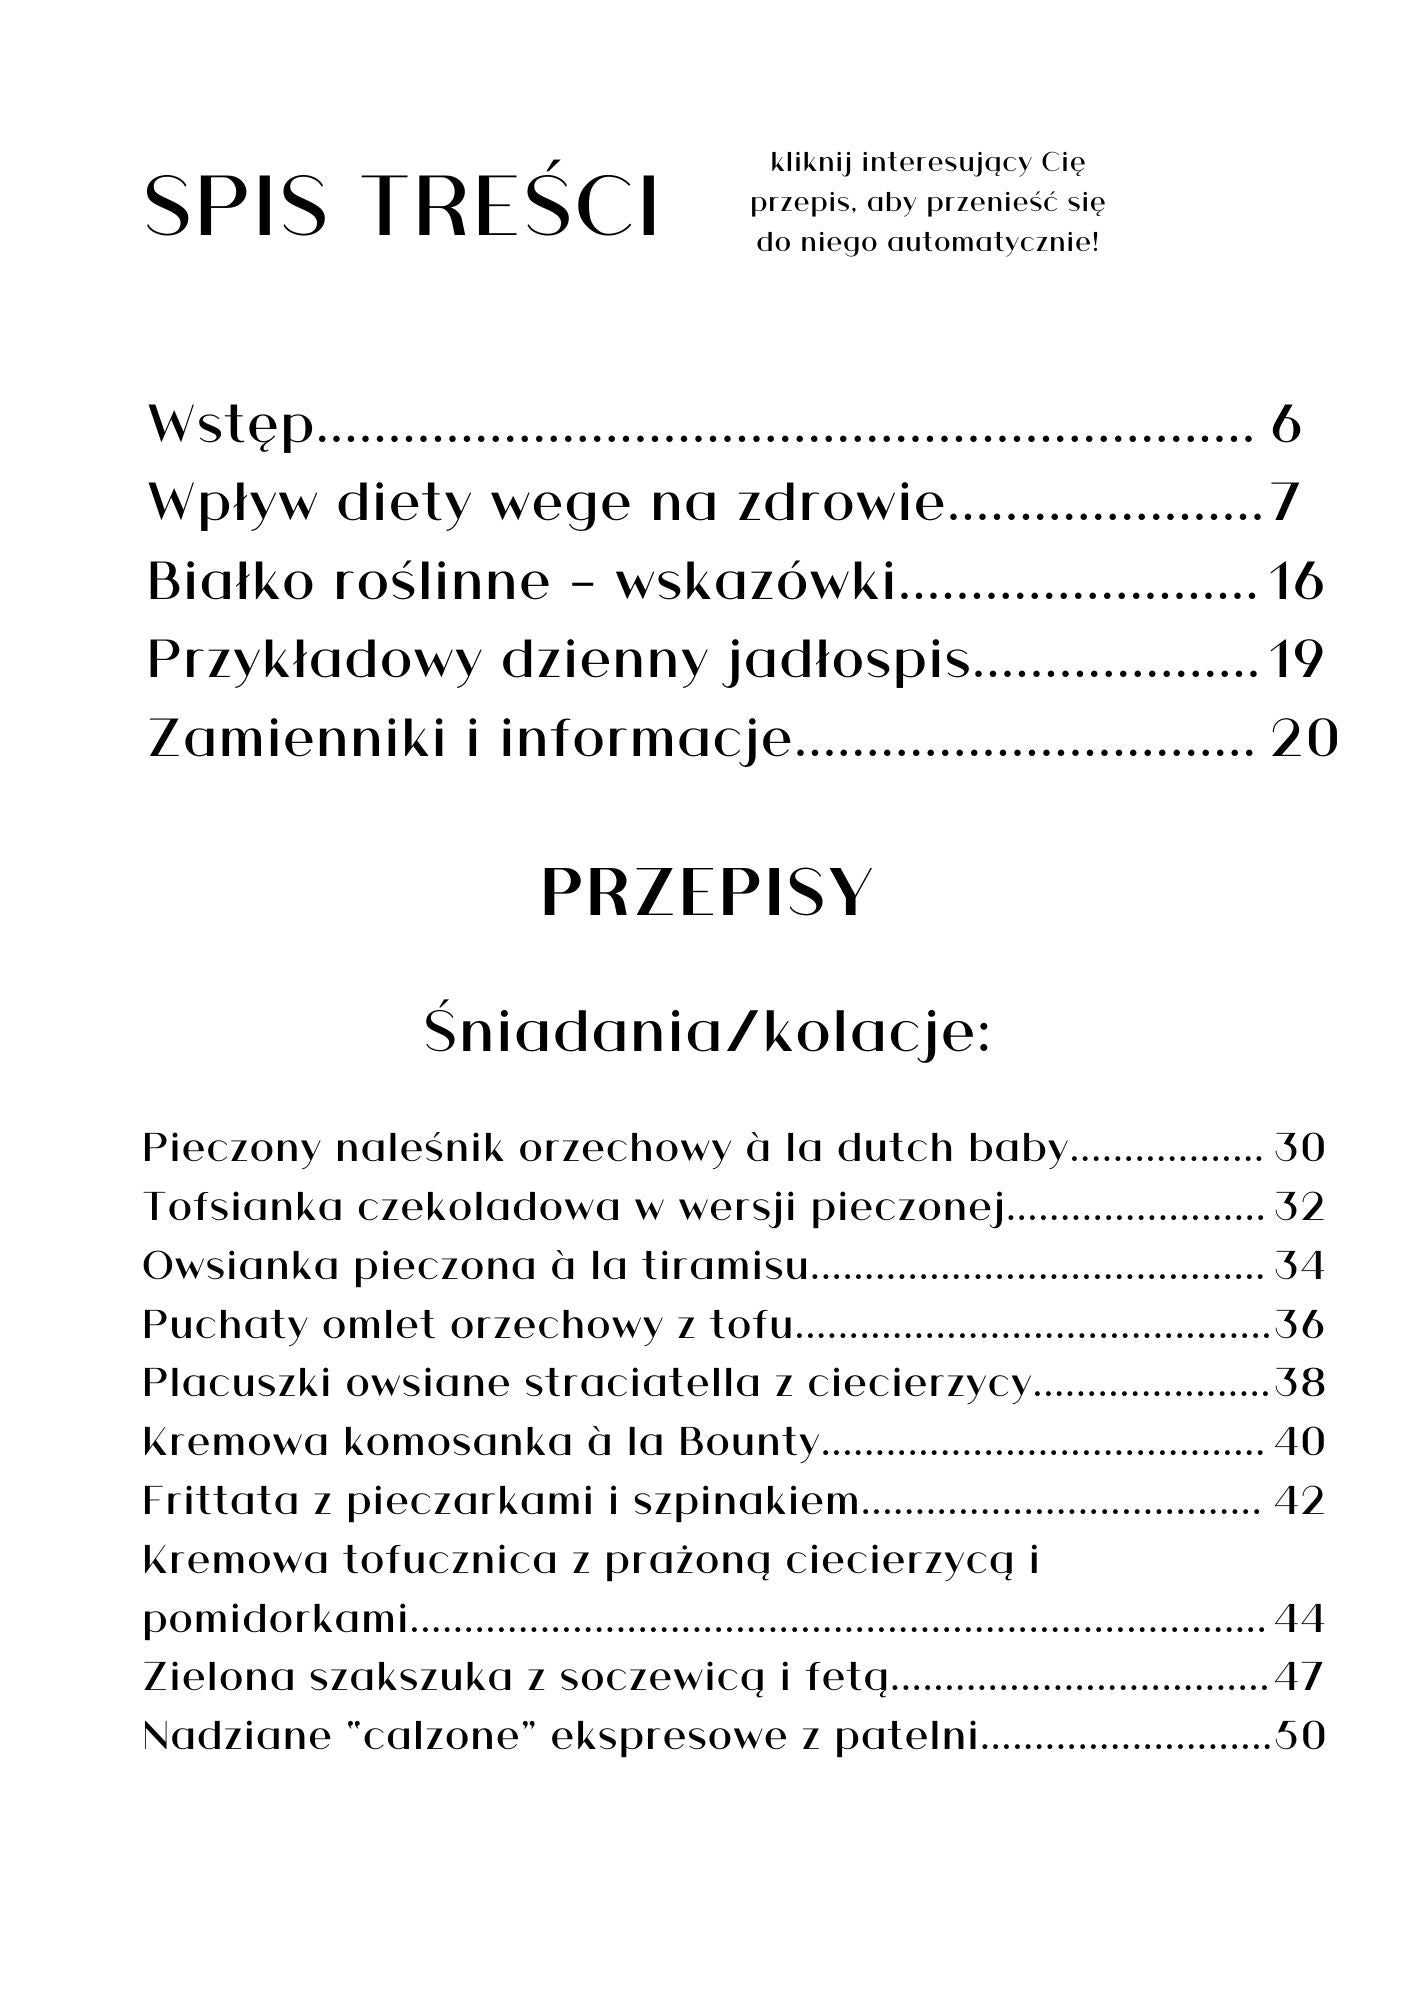 E-book "Wege siła pełna smaku!"